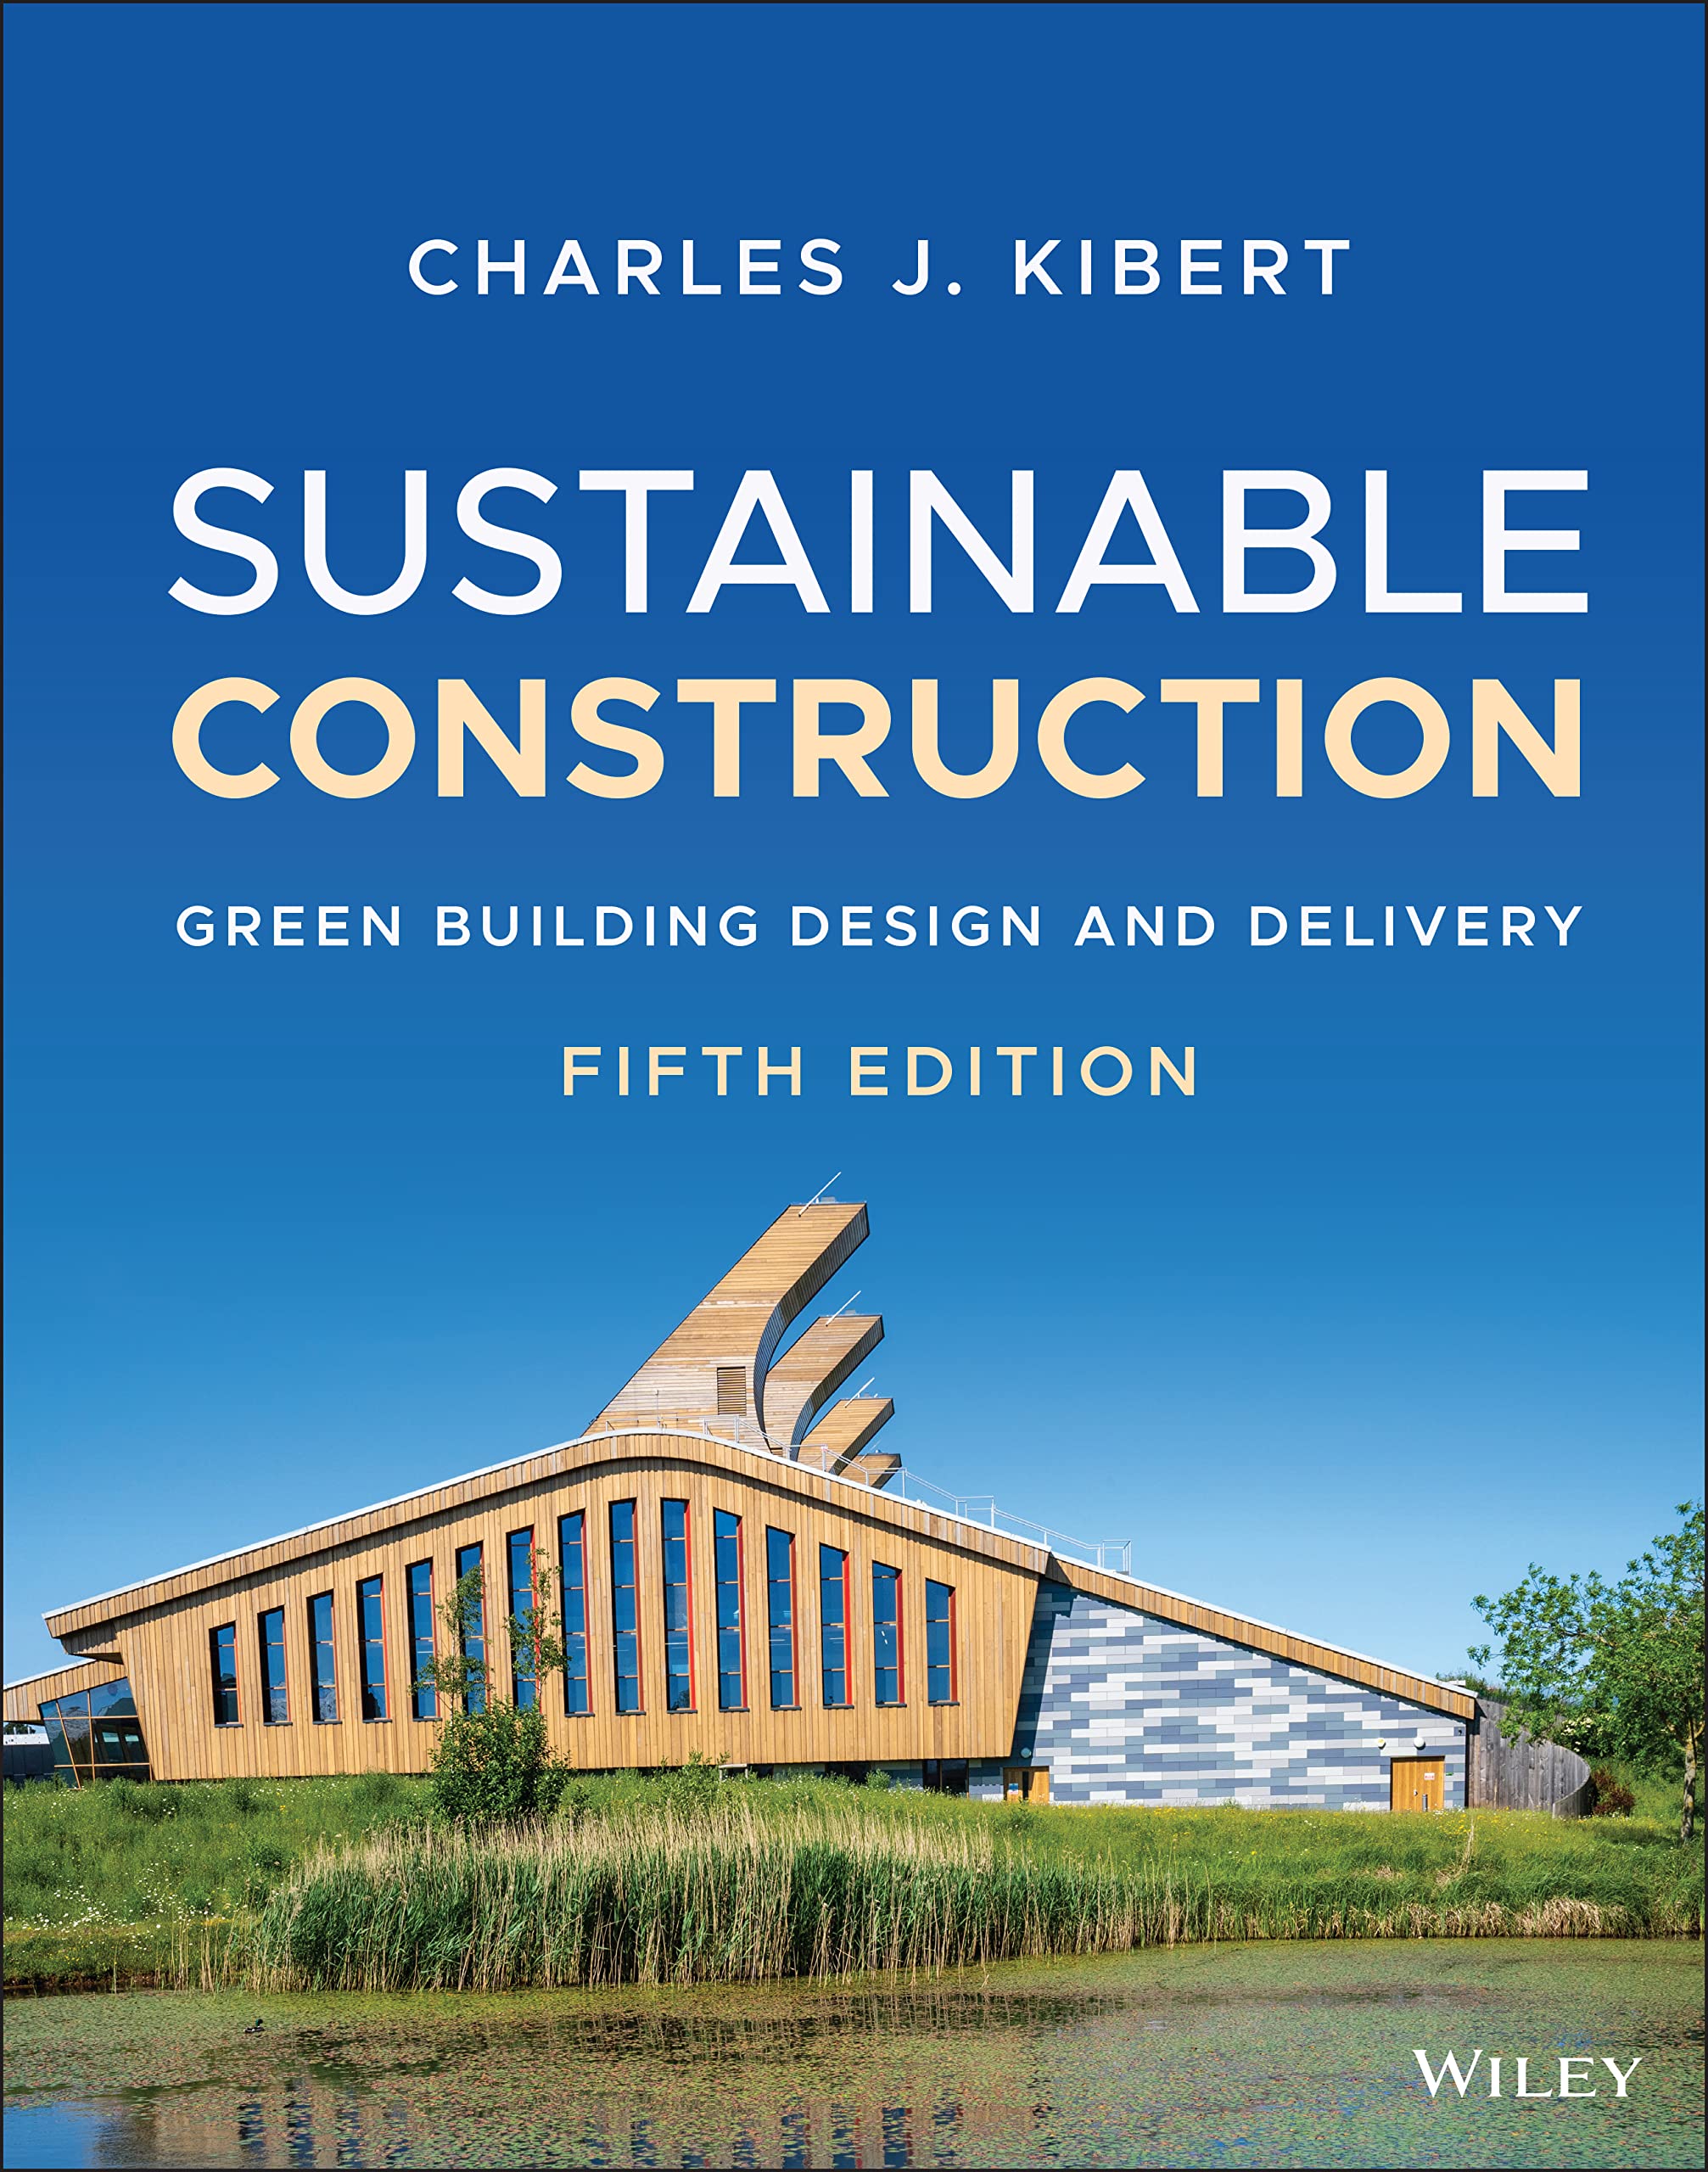 sustainable construction dissertation topics